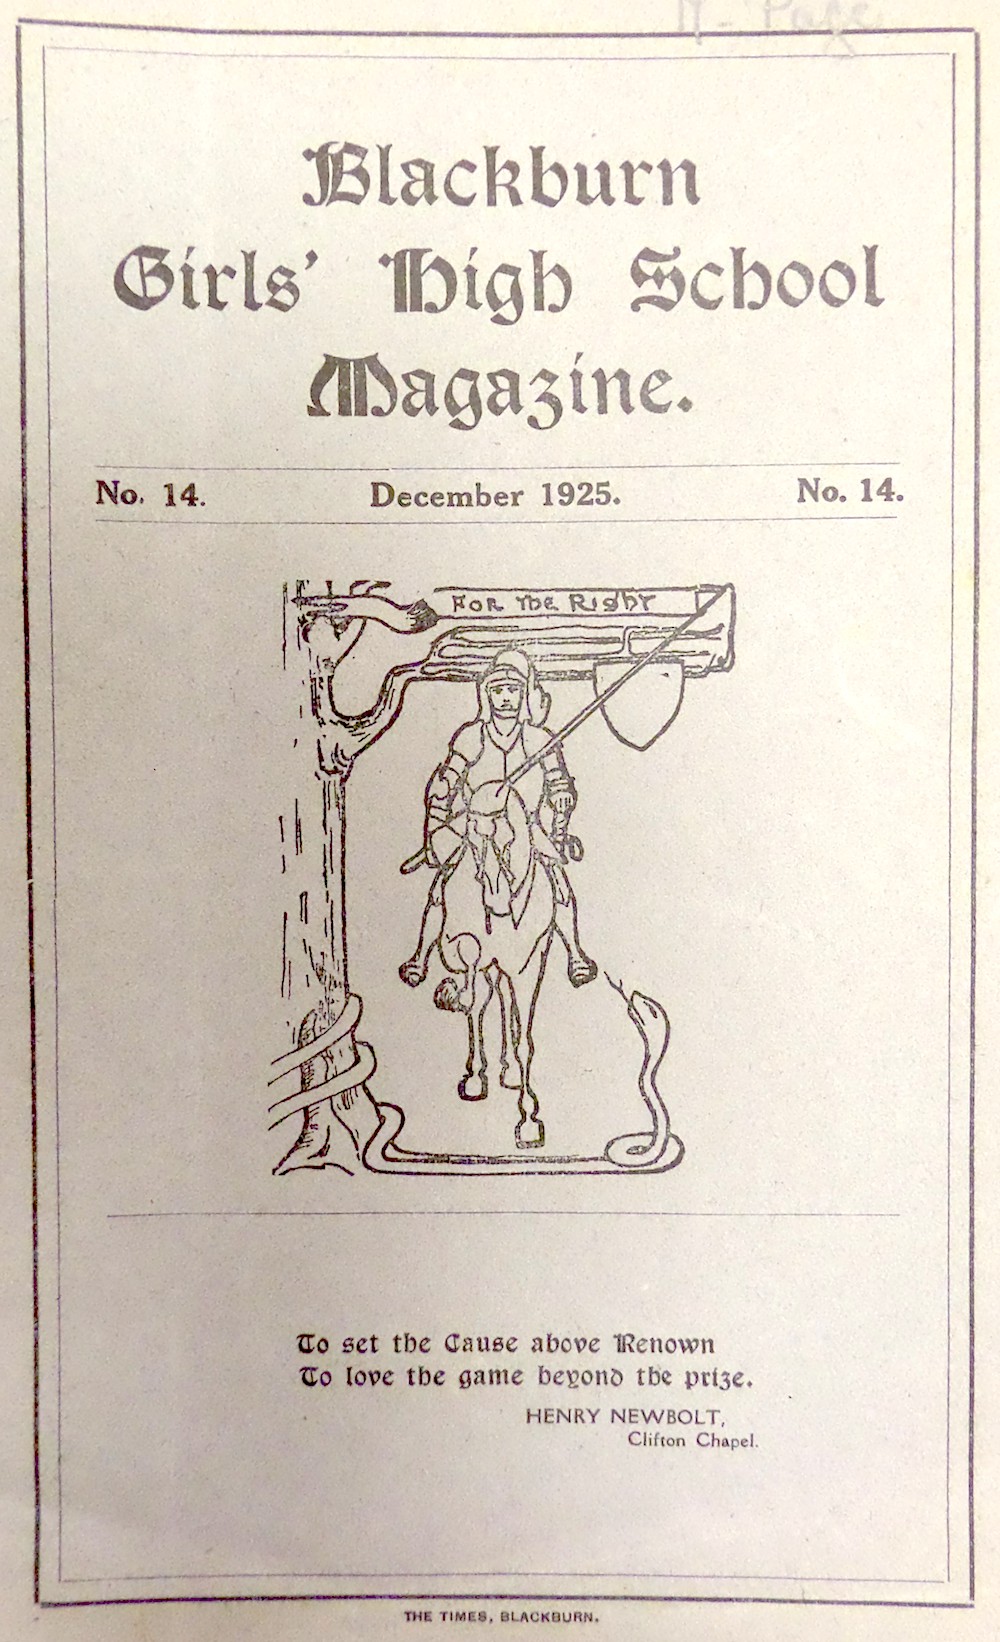 Blackburn Girls’ High School Magazine, No 14, Dec 1925 Courtesy of Lancashire Archives, Archive ref: SMBZ/9/acc7536/box 2